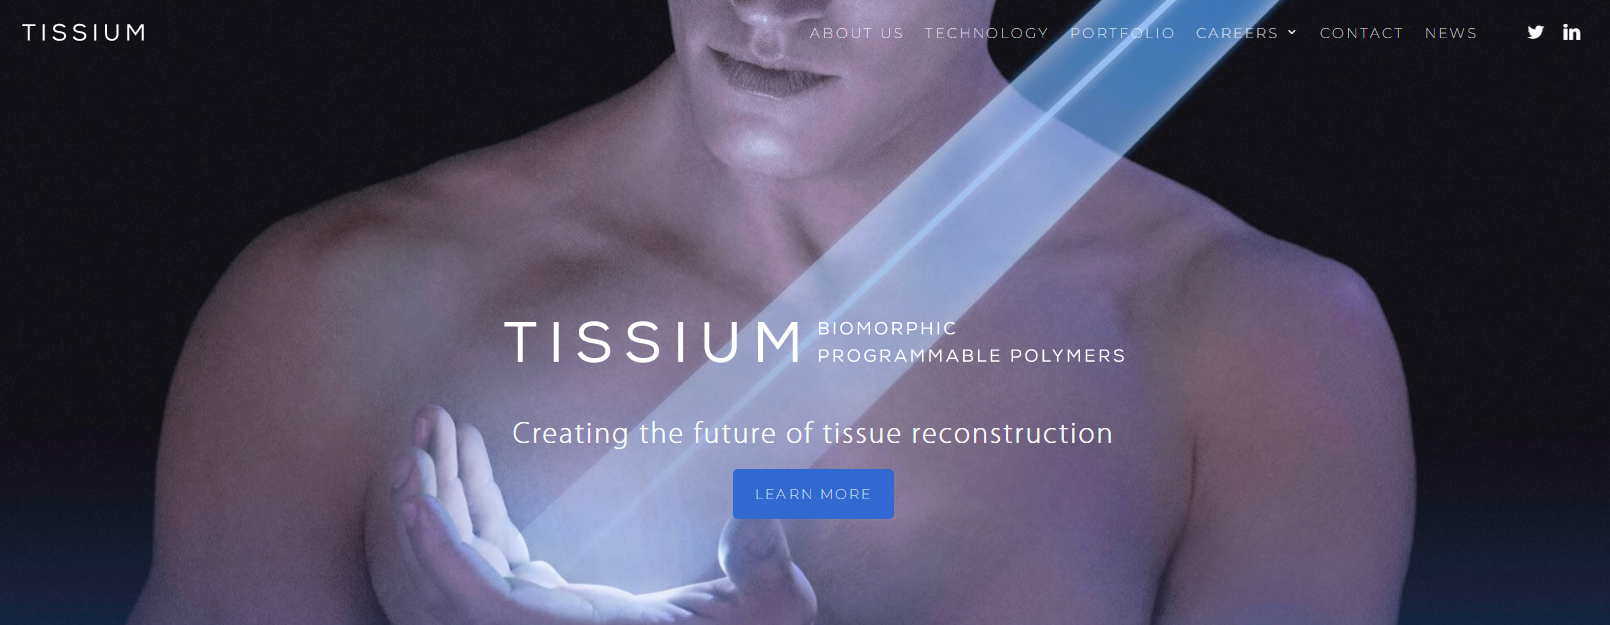 TISSIUM Raises $50 Million in Series D Funding Round to Advance Revolutionary Tissue Reconstruction Technology.